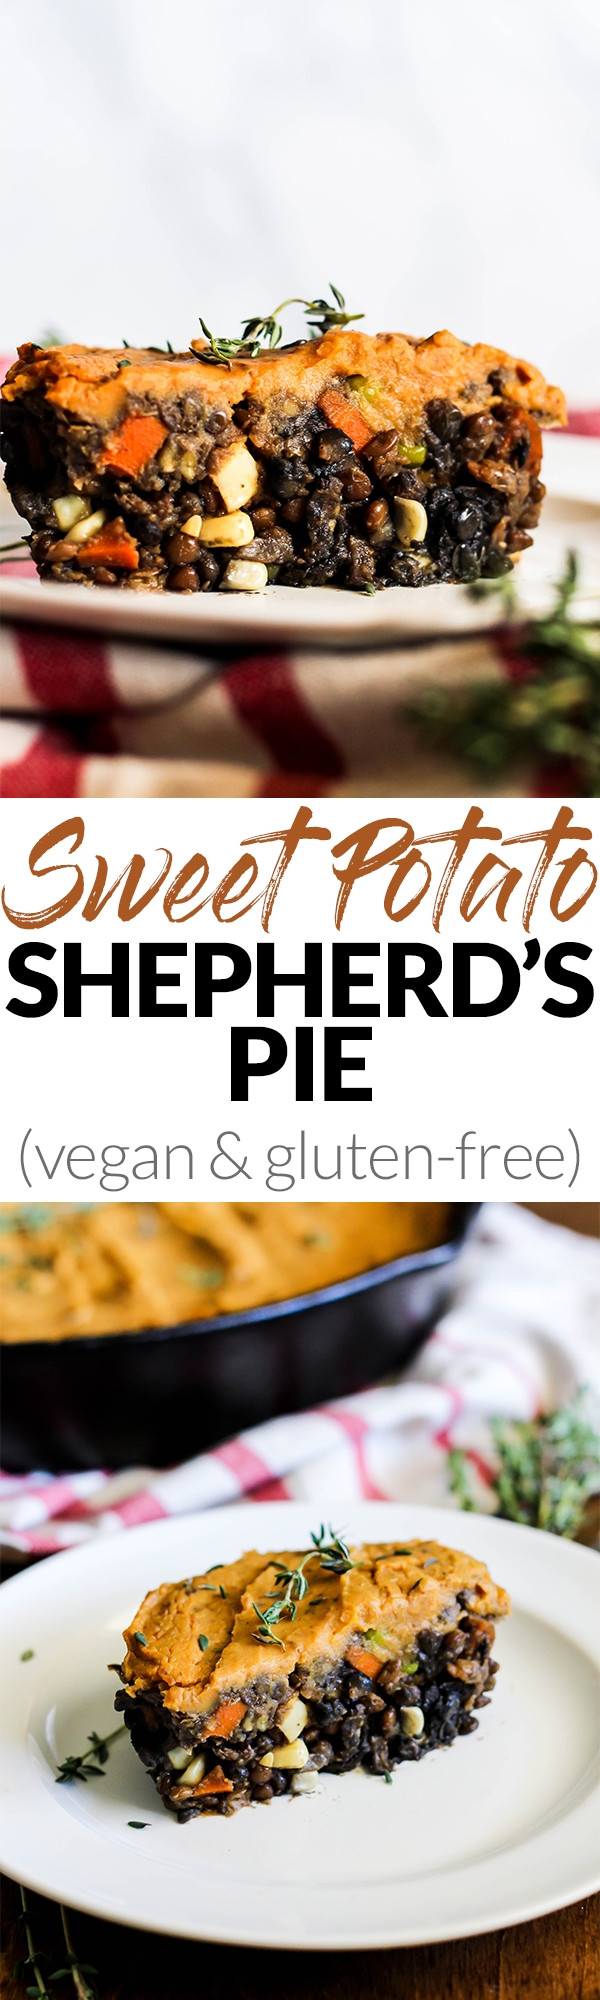 Vegetarian Shepherd'S Pie Sweet Potato
 Sweet Potato Shepherd s Pie vegan & gluten free